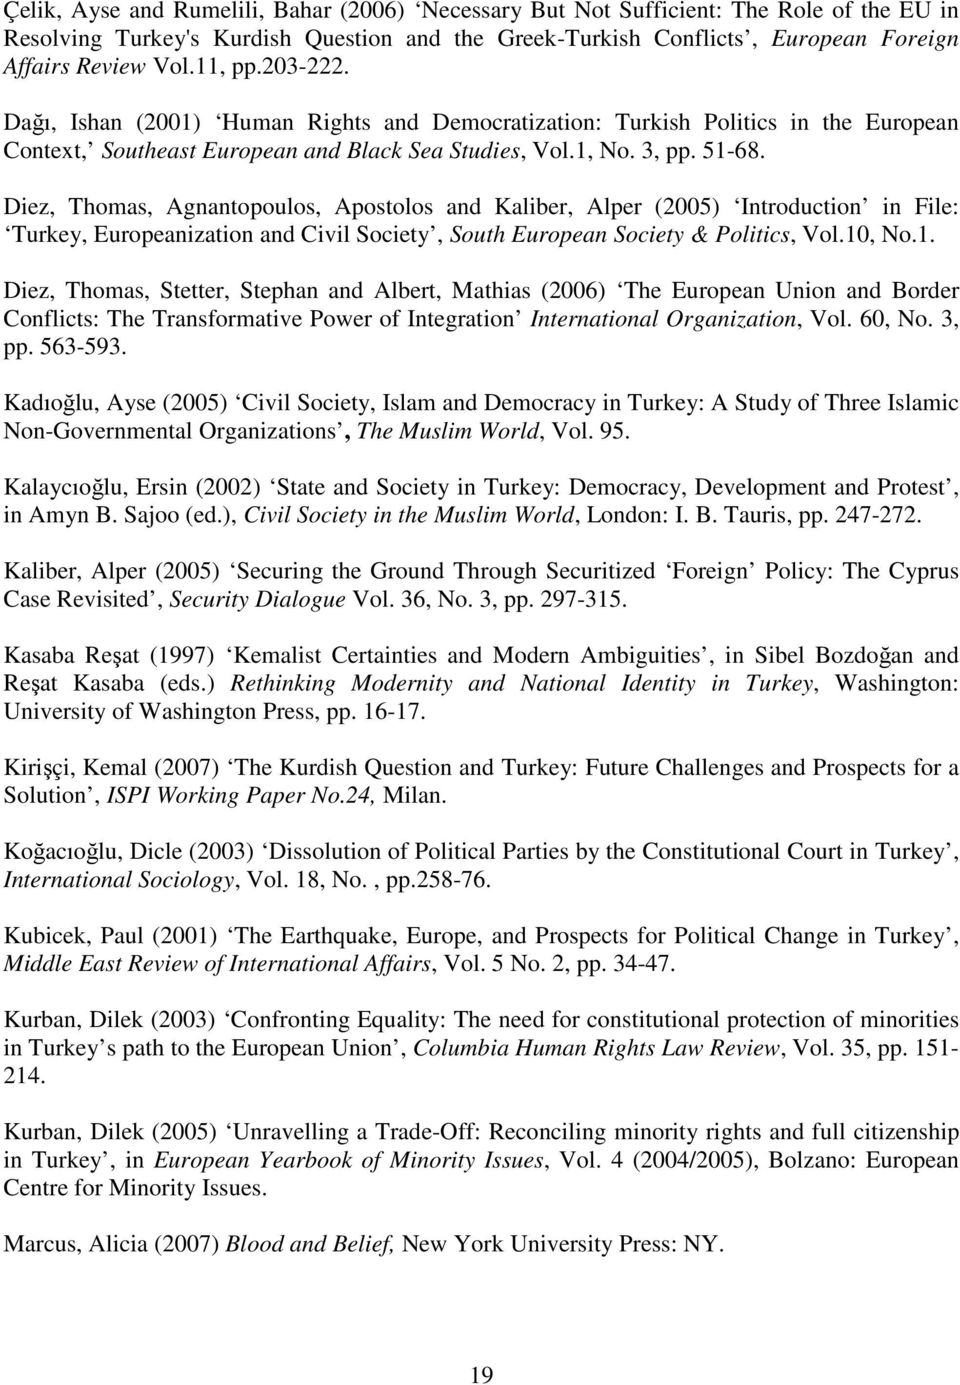 Diez, Thomas, Agnantopoulos, Apostolos and Kaliber, Alper (2005) Introduction in File: Turkey, Europeanization and Civil Society, South European Society & Politics, Vol.10